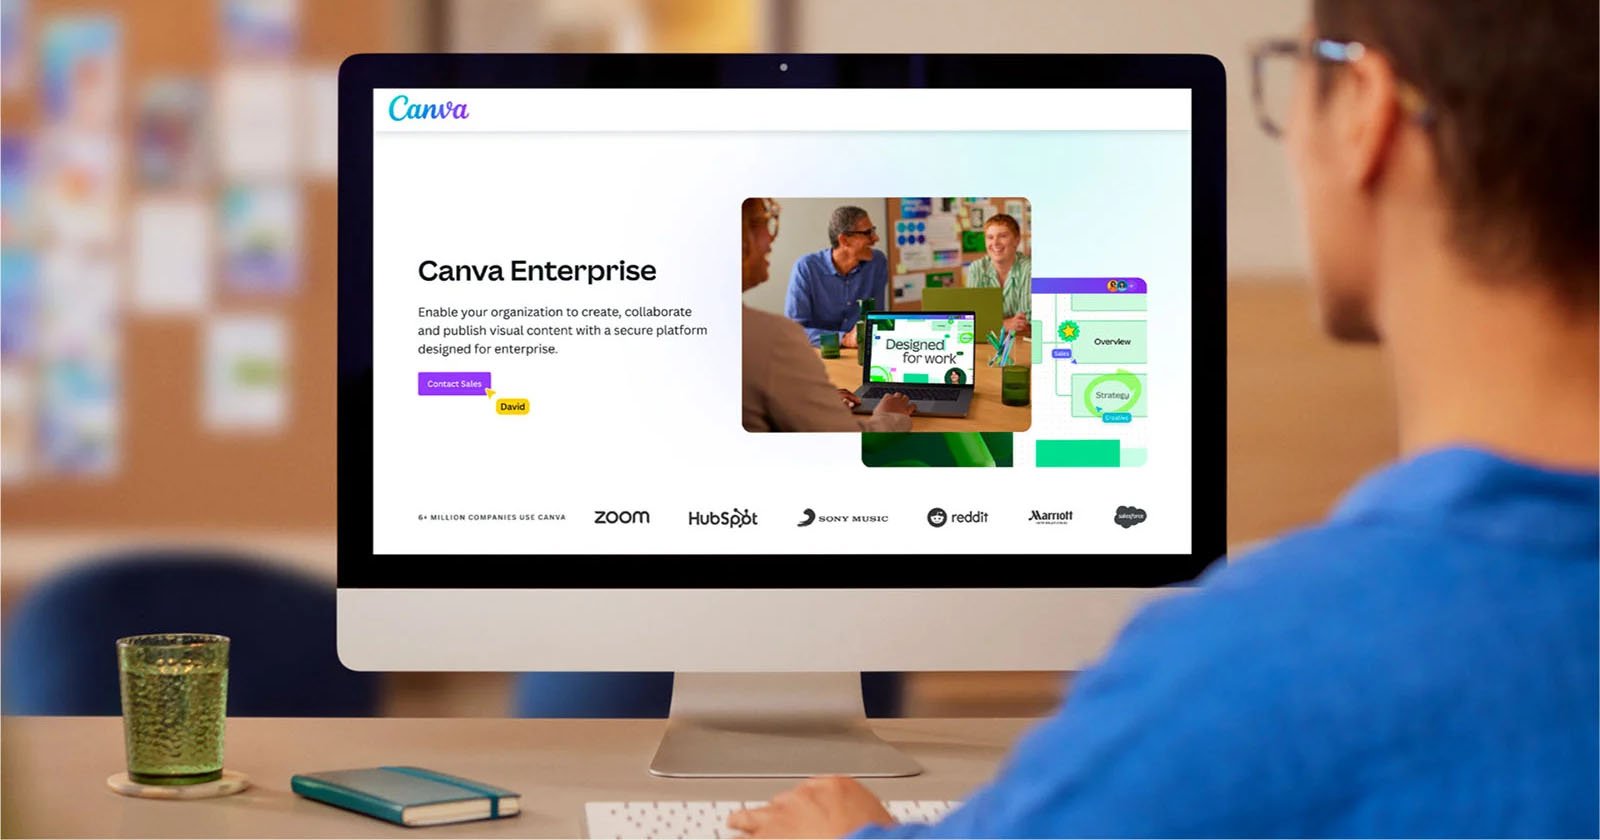 Adobe Competitor Canva Gets Major Makeover, Targets Enterprise Users